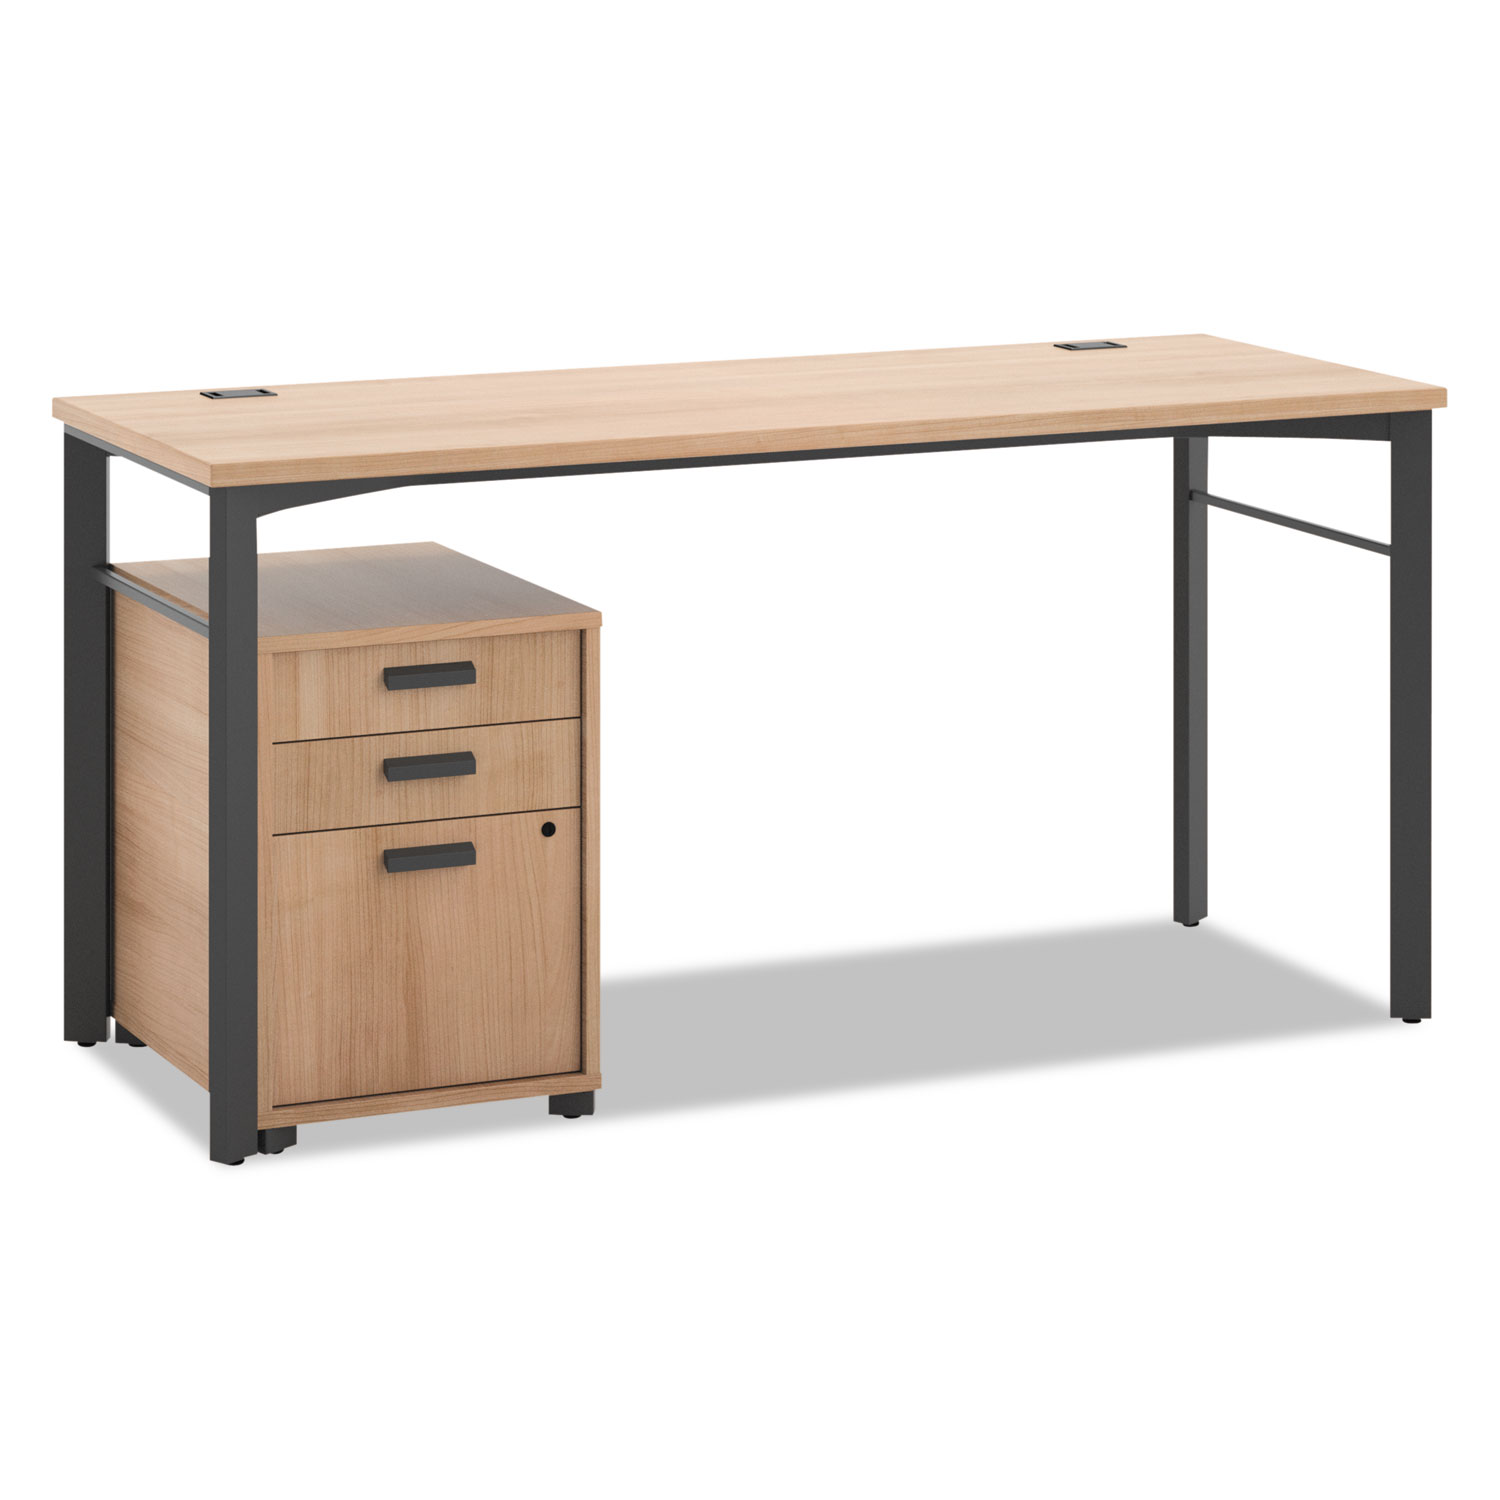  HON BSXMLDP6024W Manage Series Table Desk with Pedestal, 60w x 23.5d x 29.5h, Wheat (BSXMLDP6024W) 